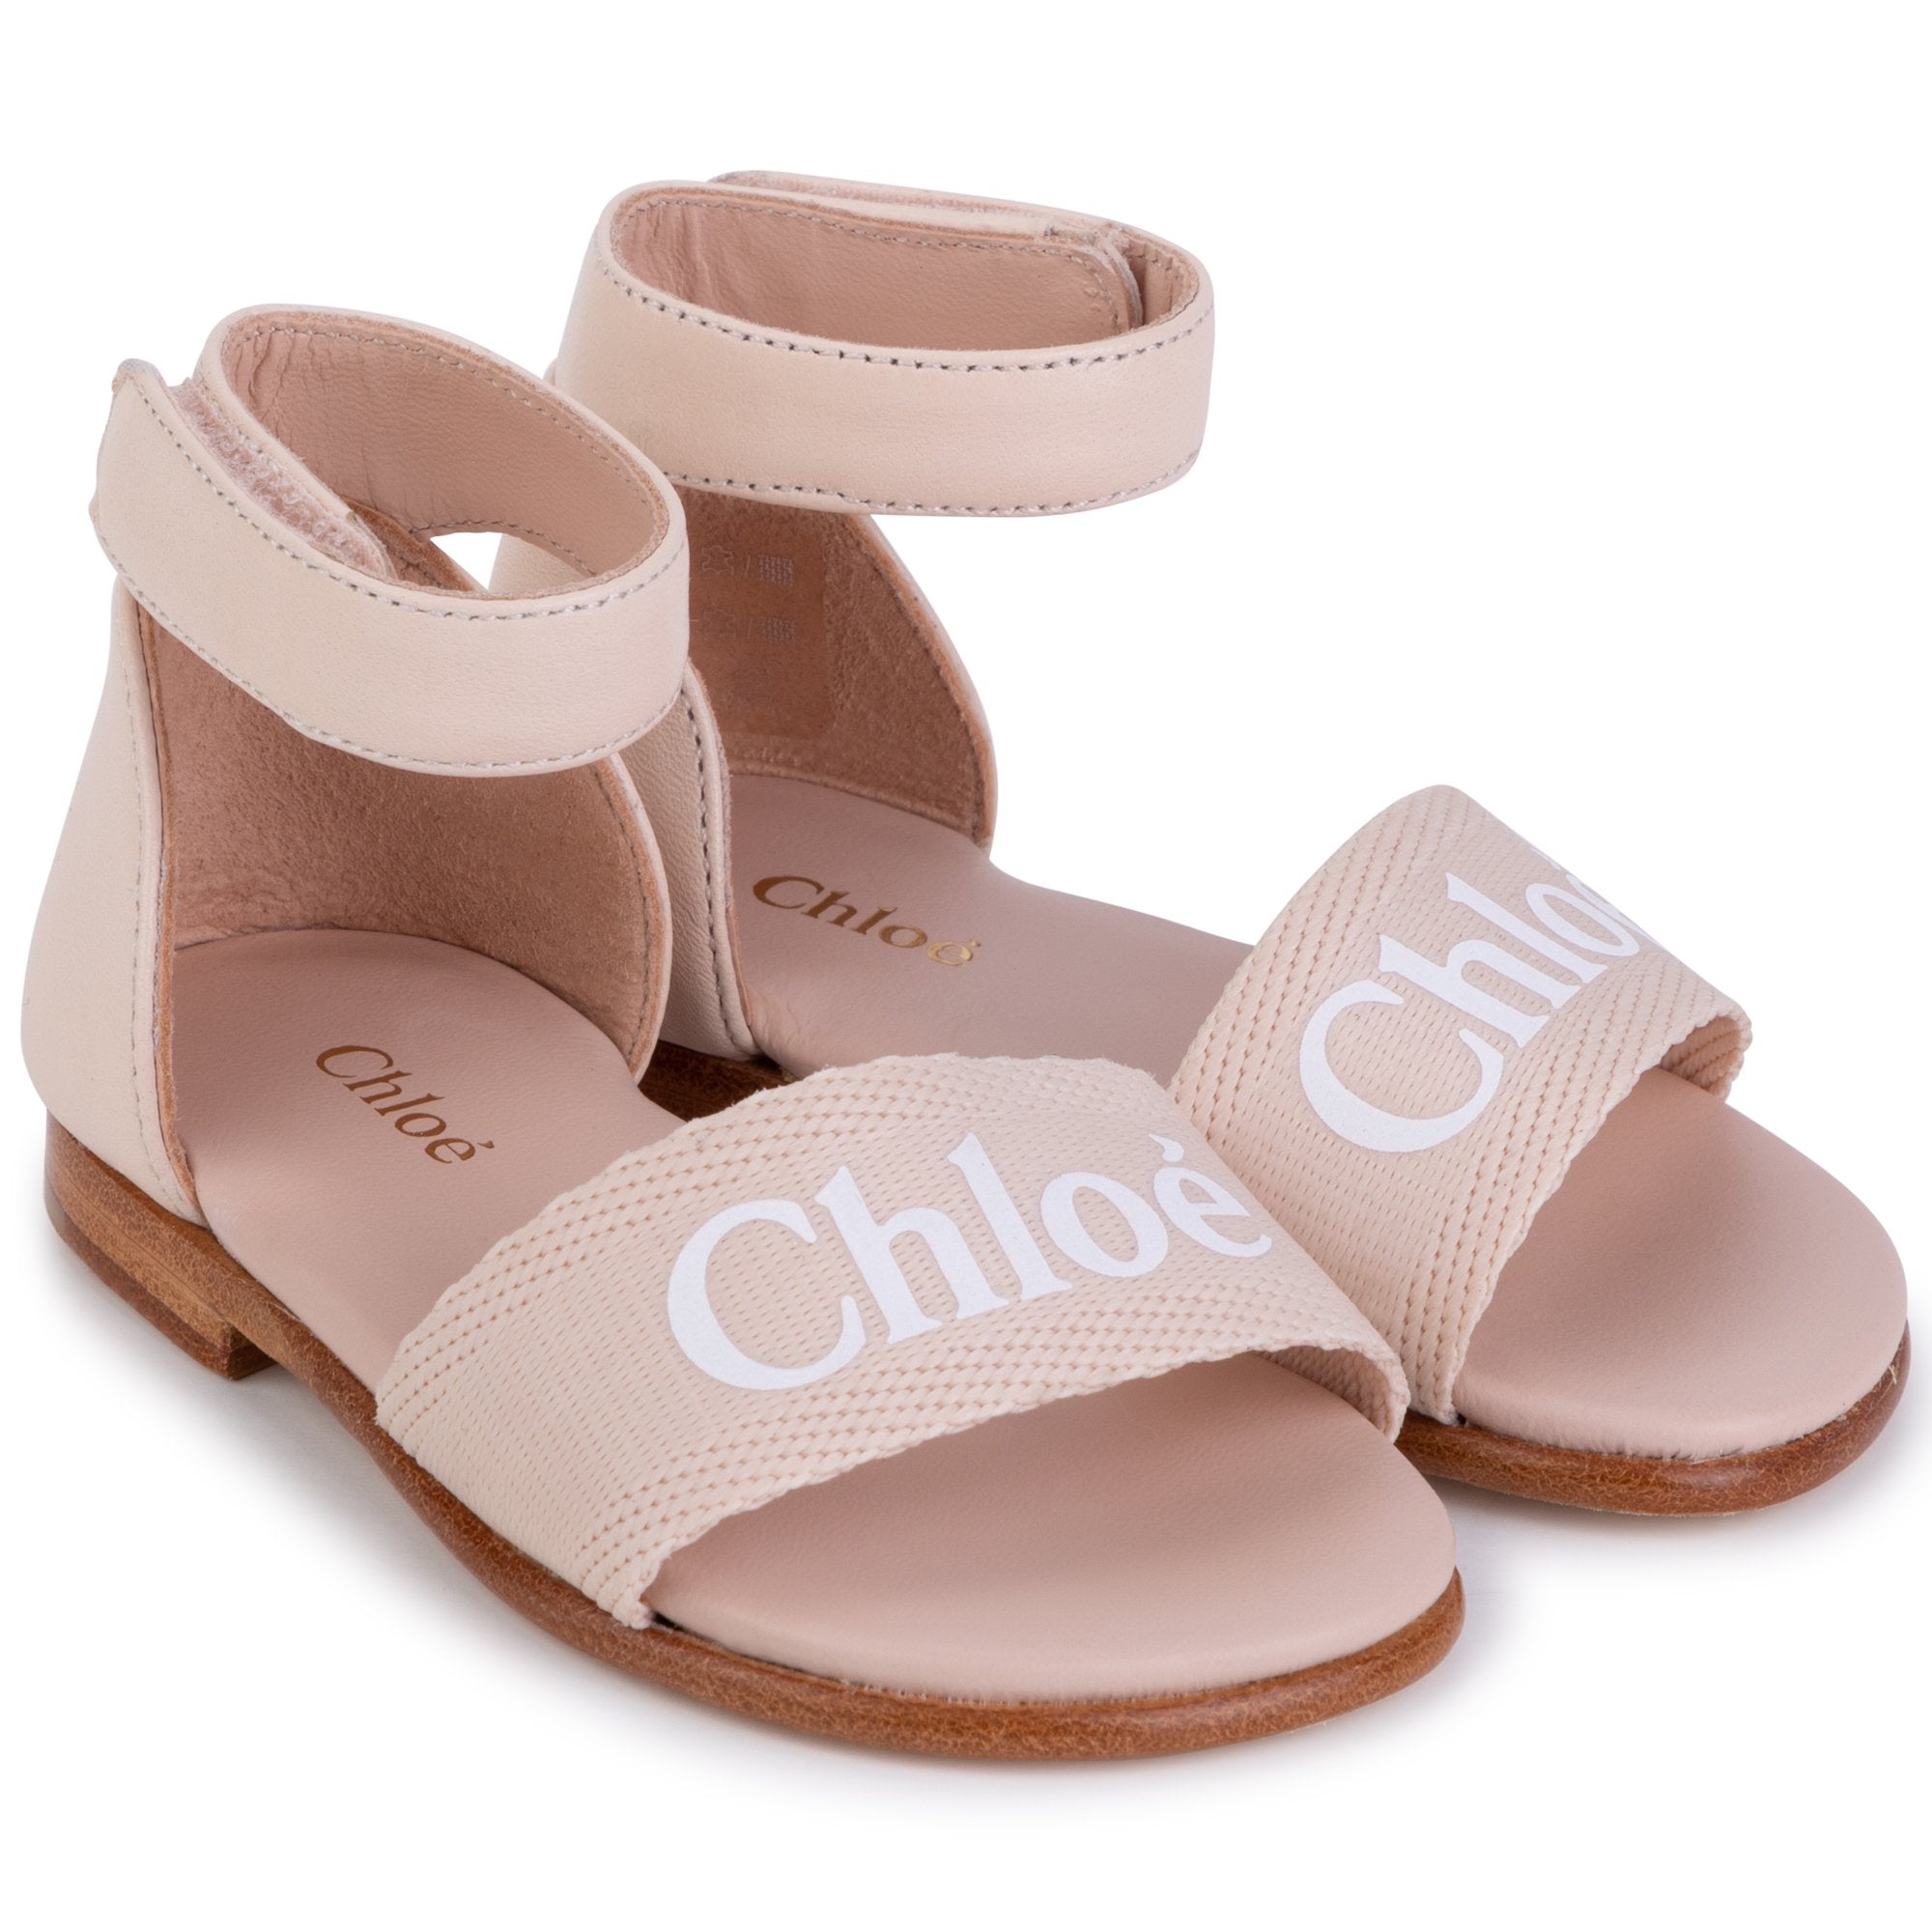 Chloe Girls Pink Sandals